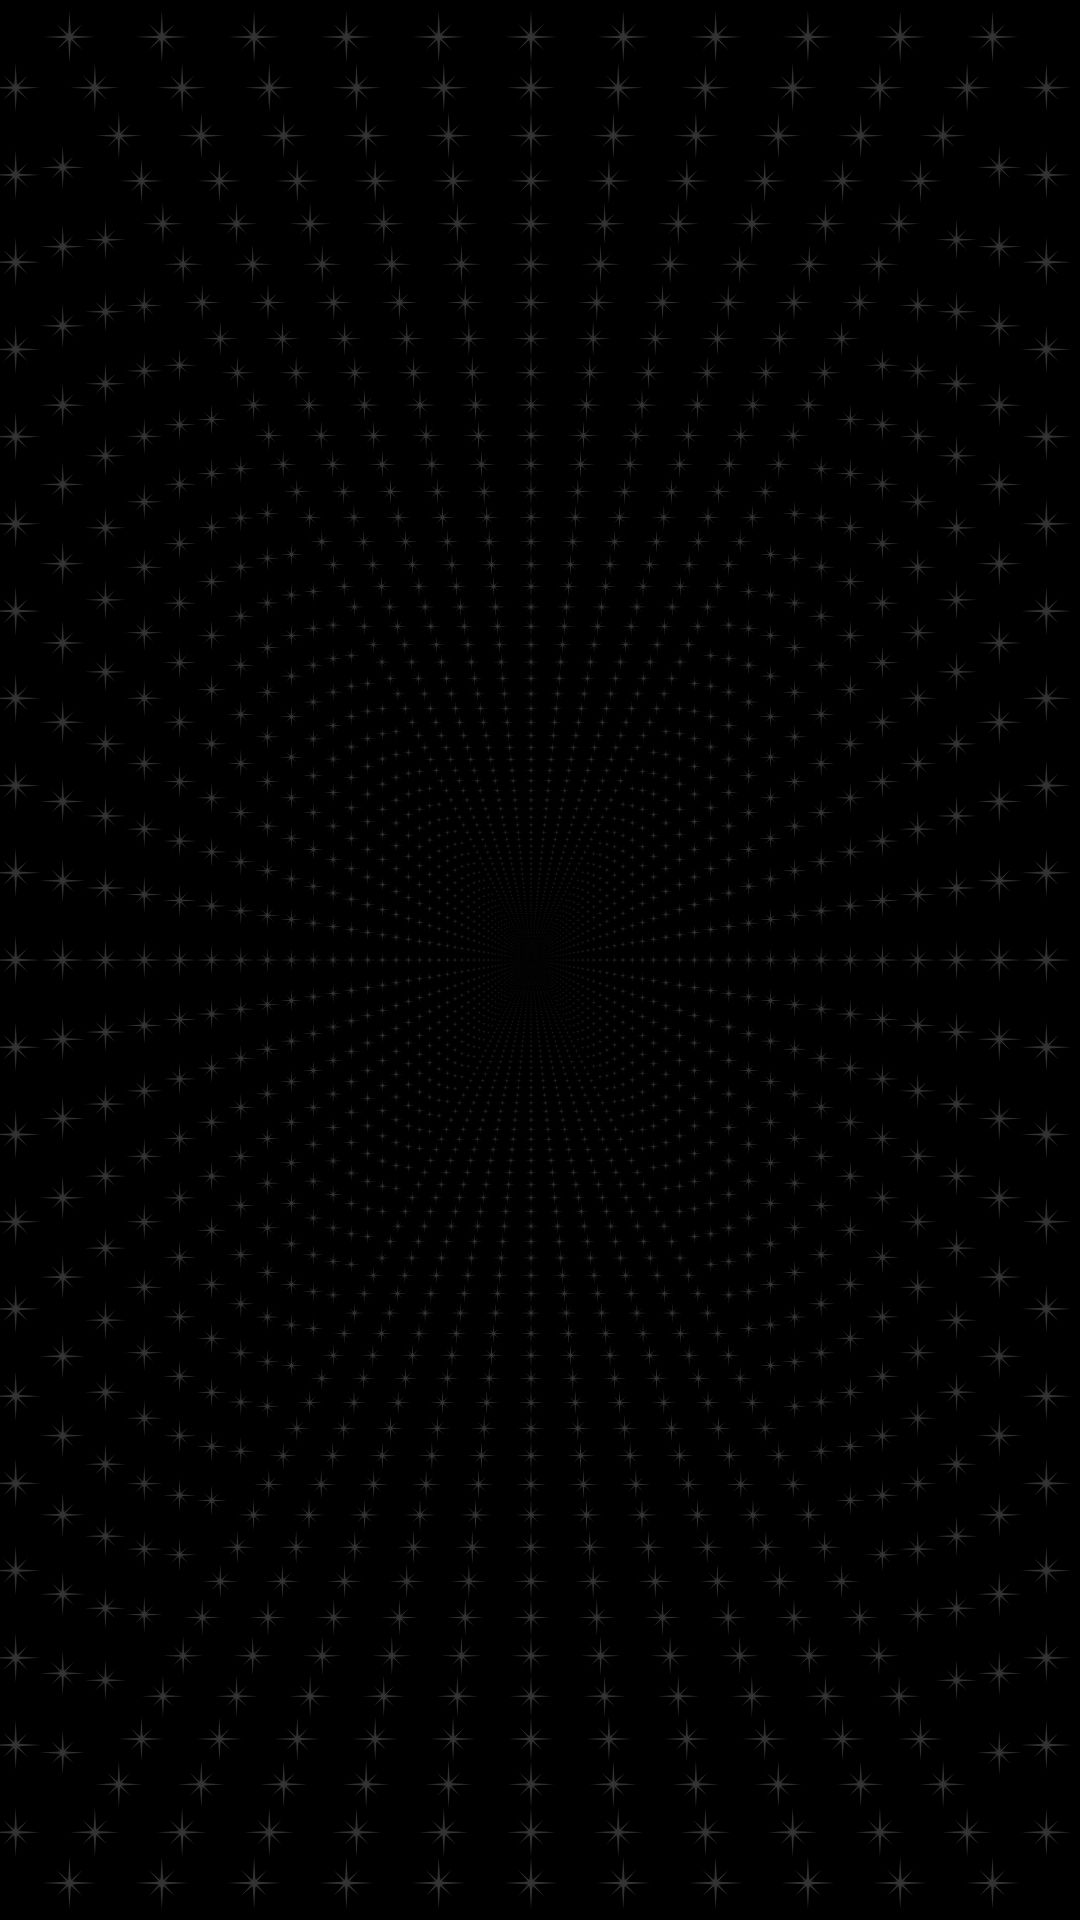 Скачать 1080x1920 блеск, точки, черный фон обои, картинки samsung galaxy  s4, s5, note, sony xperia z, z1, z2, z3, htc one, lenovo vibe